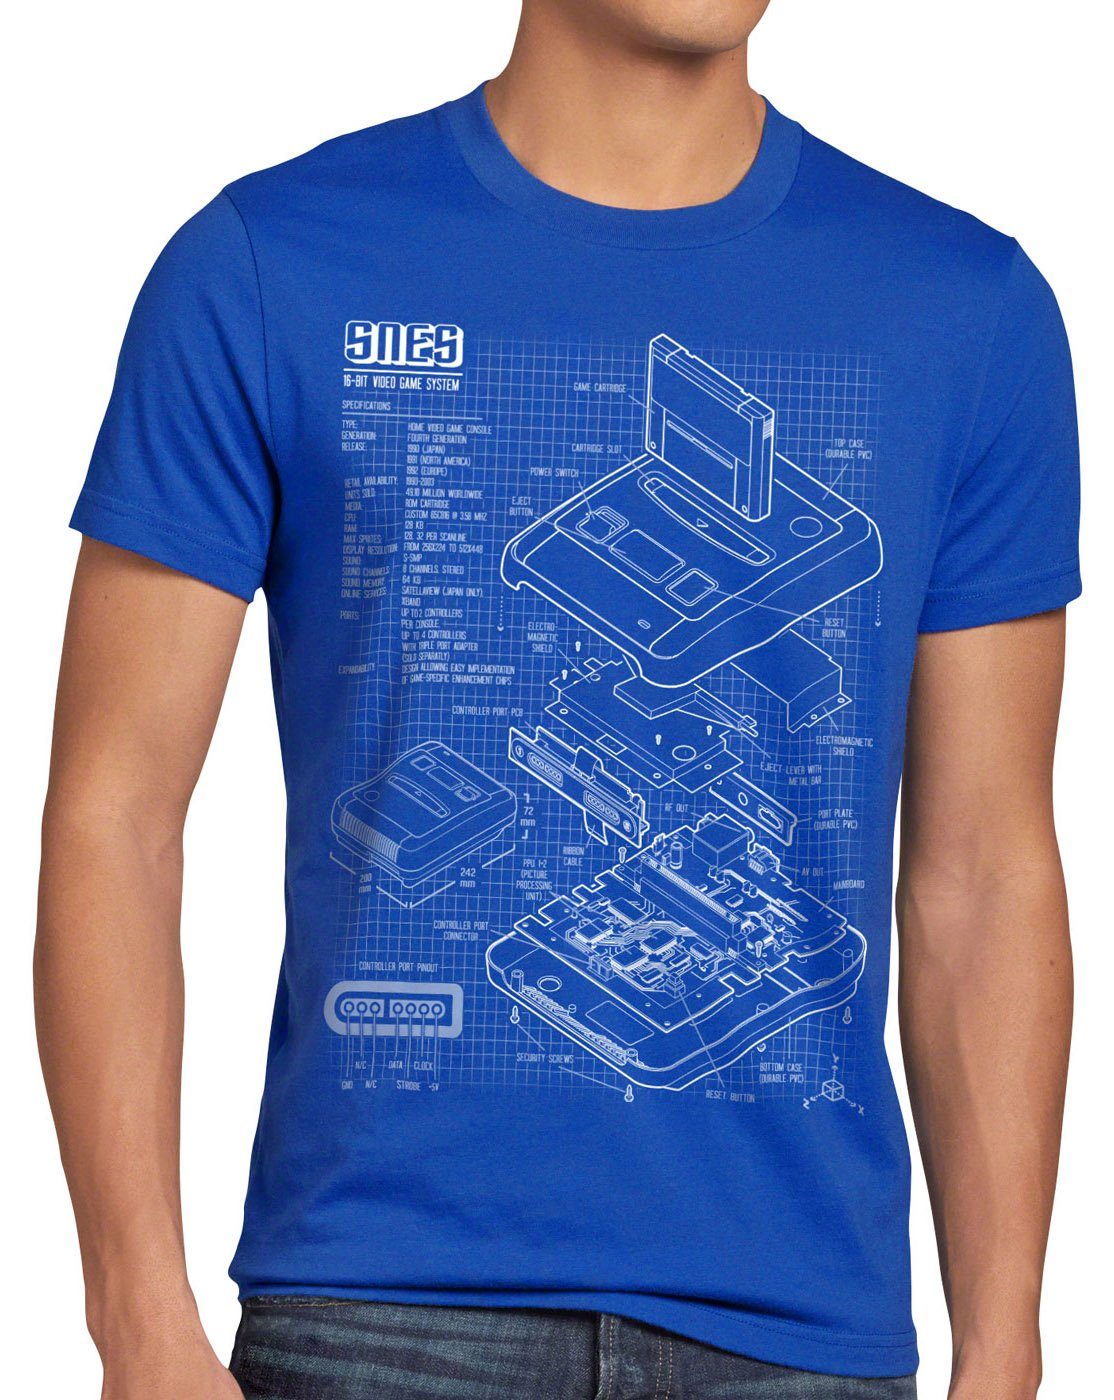 style3 Print-Shirt Herren T-Shirt SNES Blaupause 16-Bit Videospiel